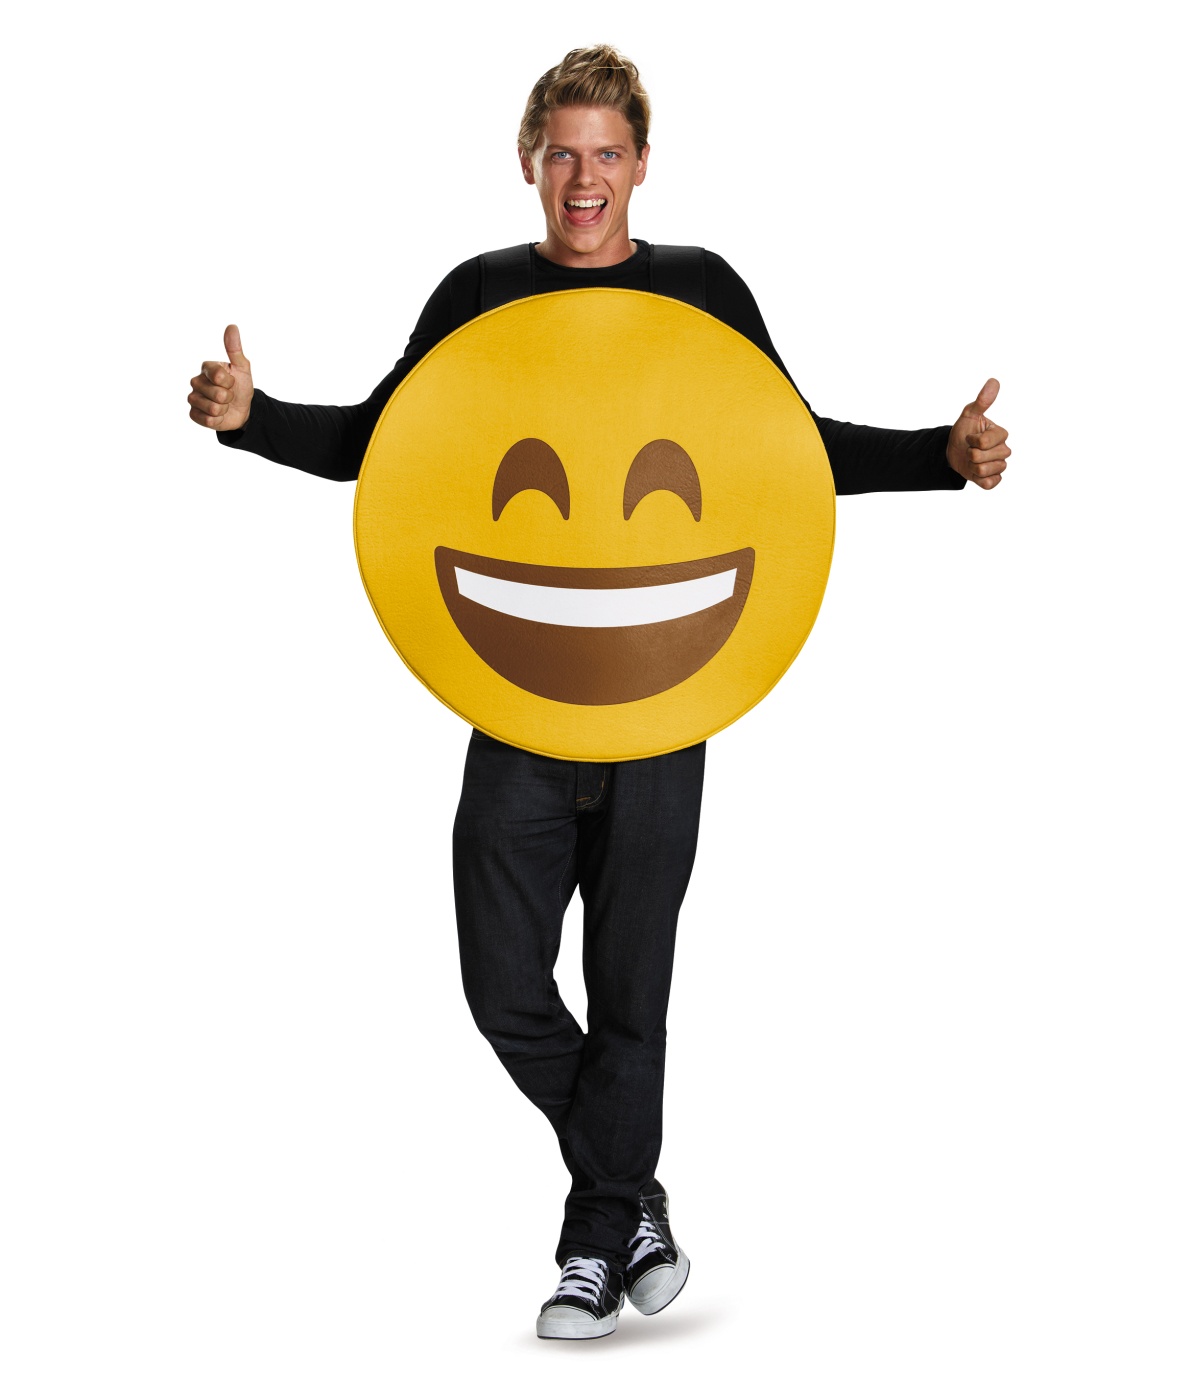  Open Mouth Smile Emoticon Costume